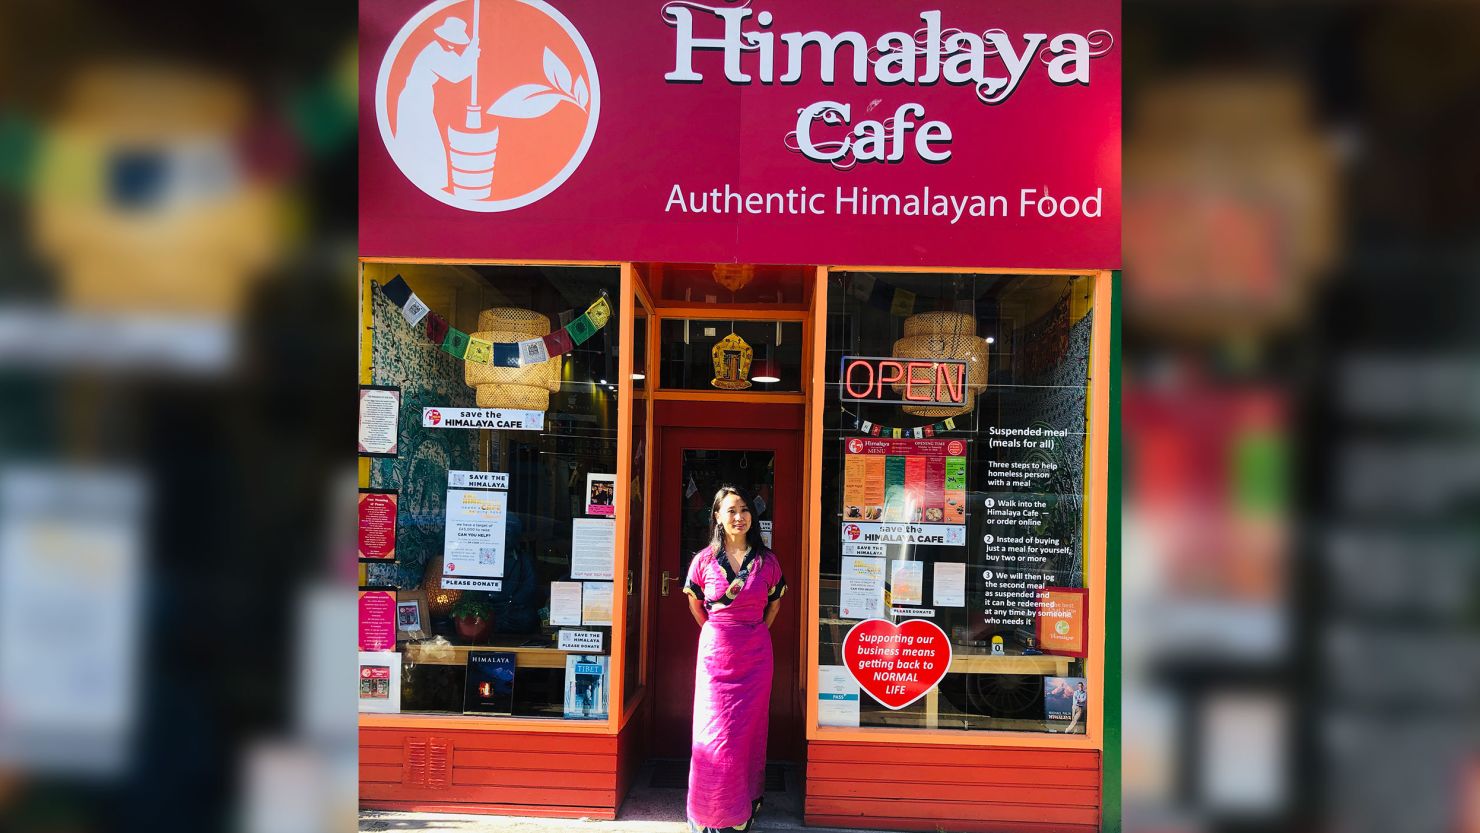 Reka Gawa set up the Himalaya Cafe in Edinburgh after a chance meeting with the Dalai Lama.